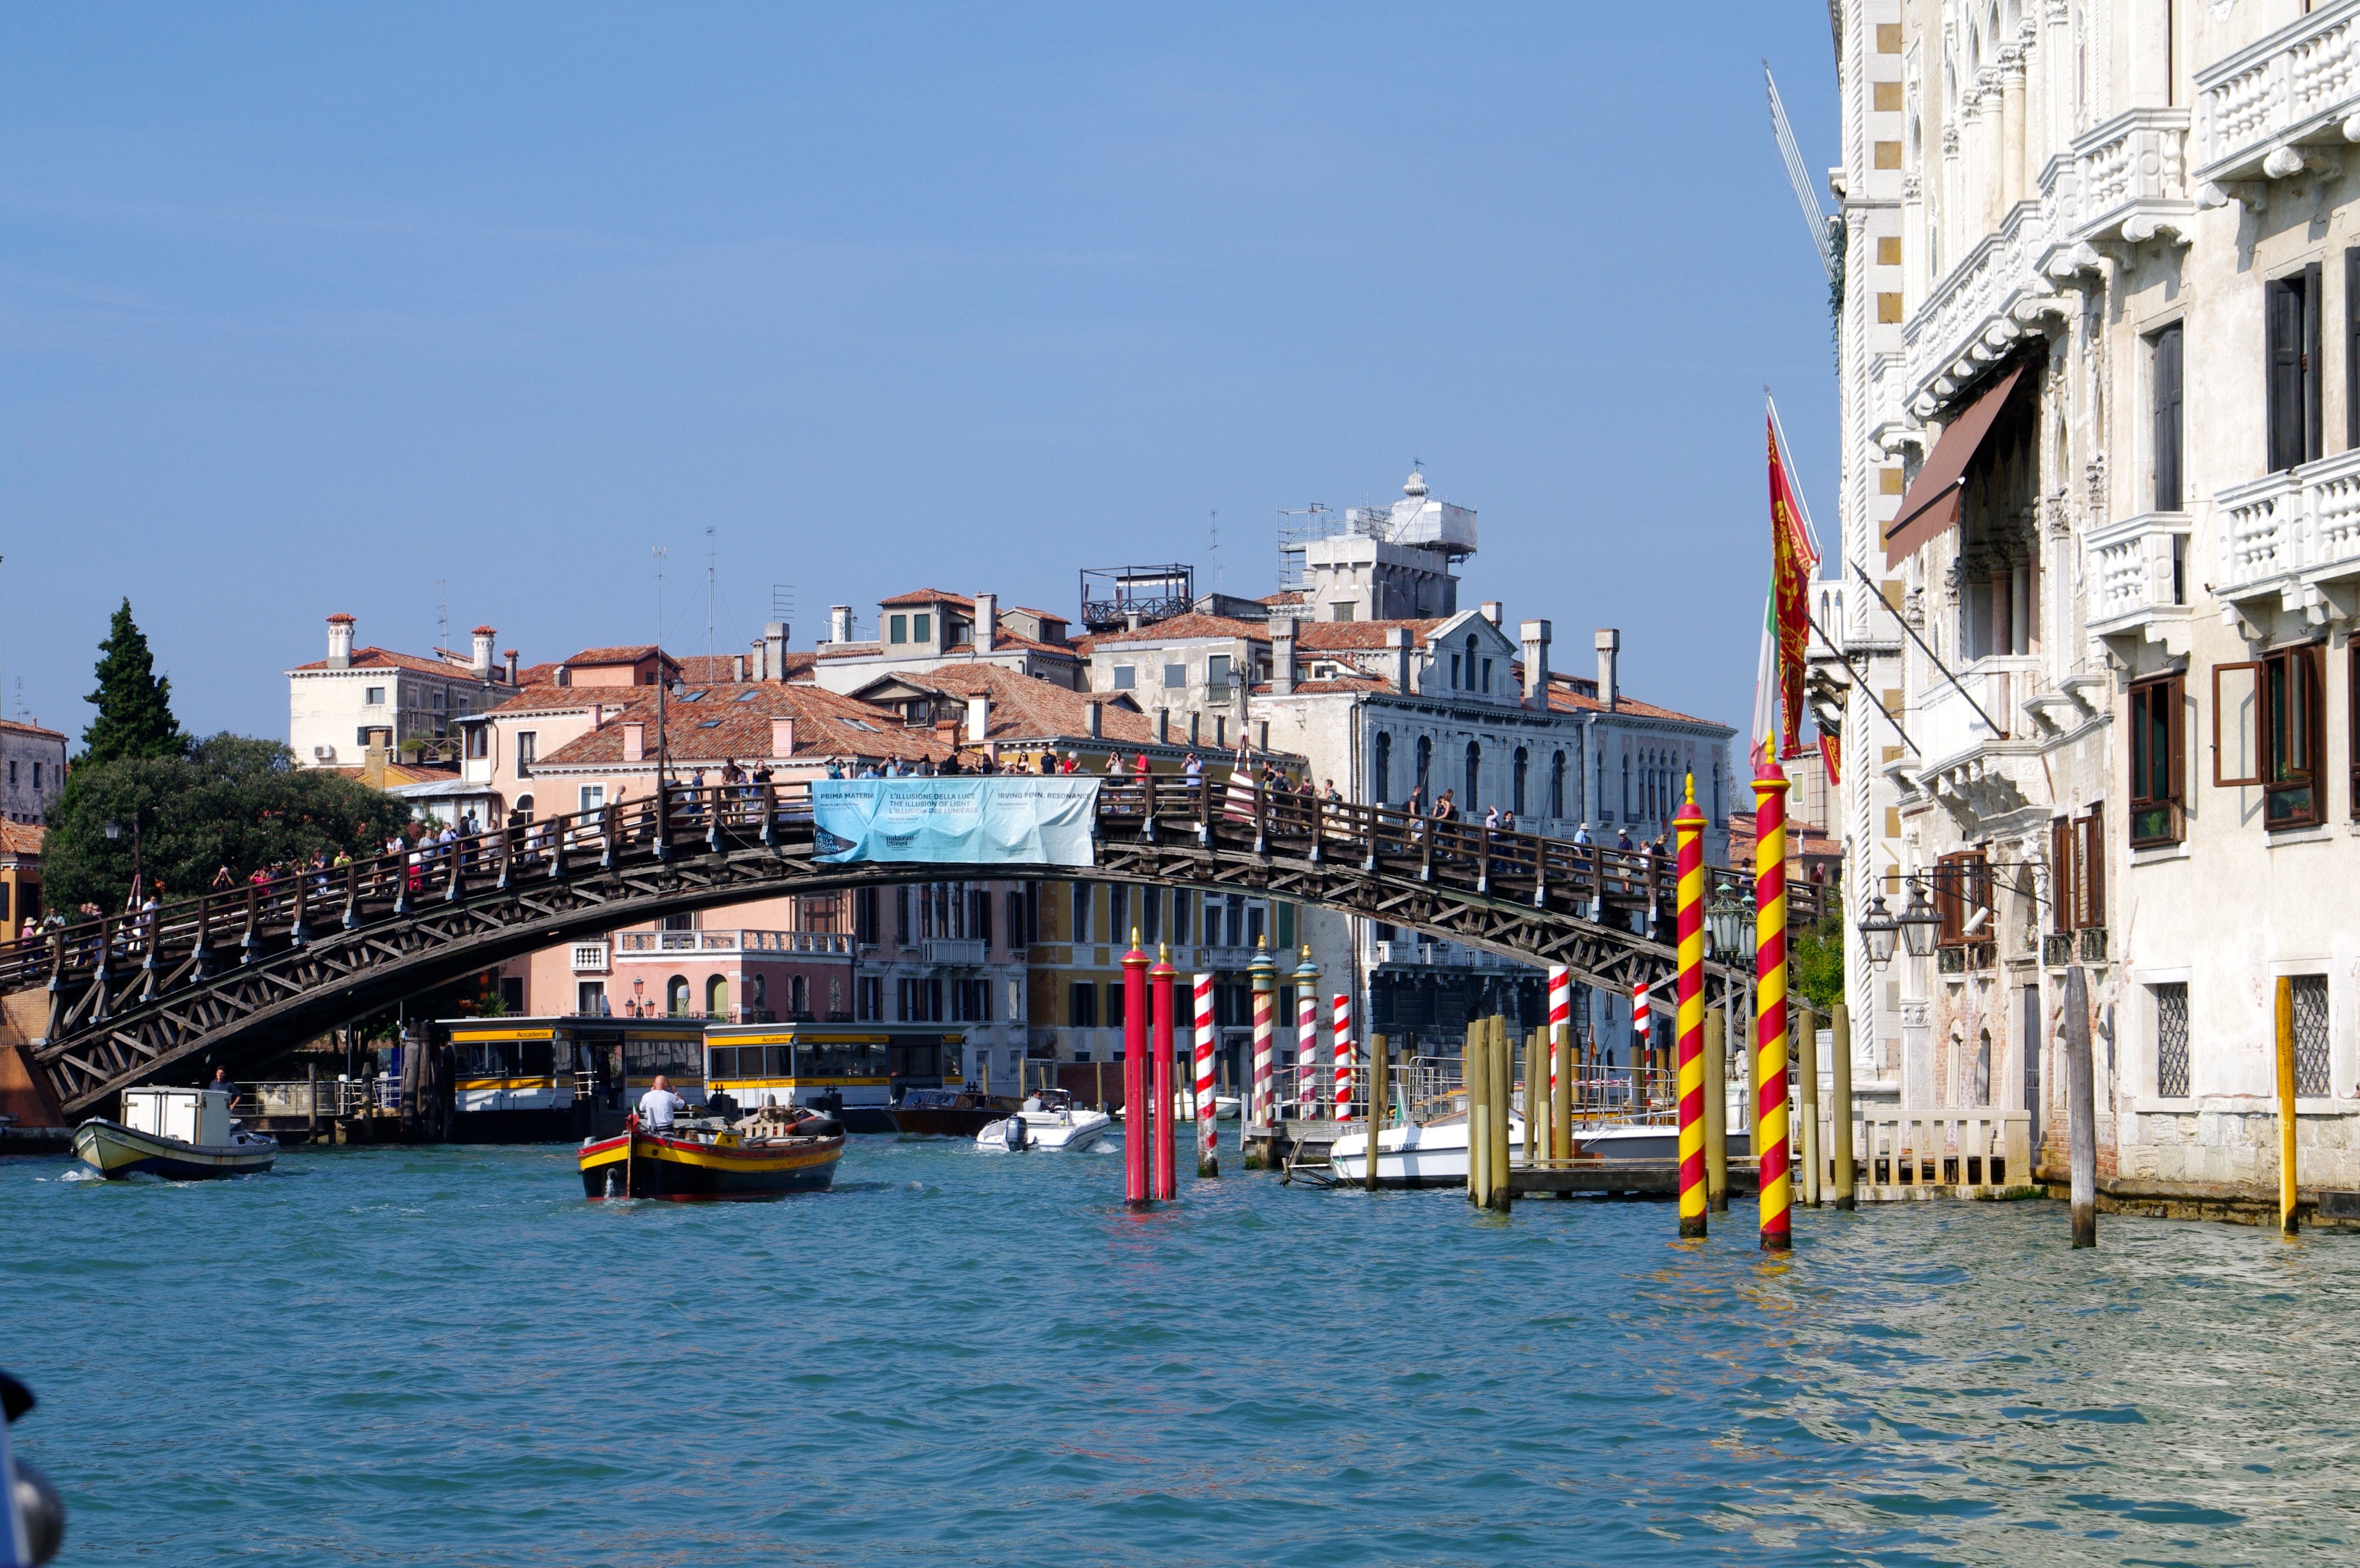 Academia Bridge connects Campo San Vidal with the Dorsoduro sestieri where students congregate in Venice.